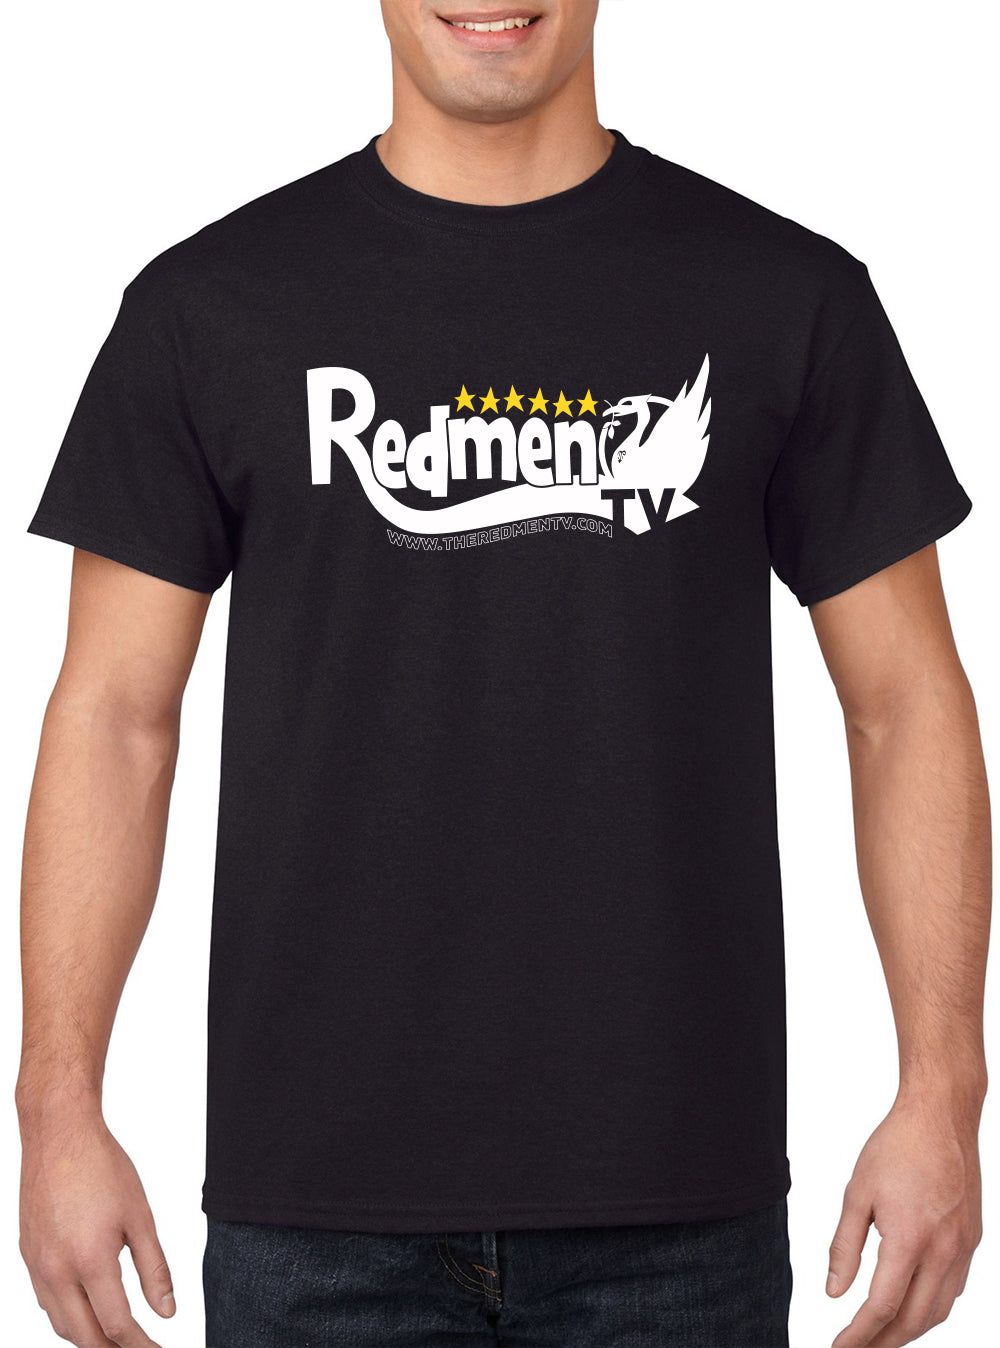 12 REDMEN ORIGINALS 'Logo' Edition Tee - The Redmen TV